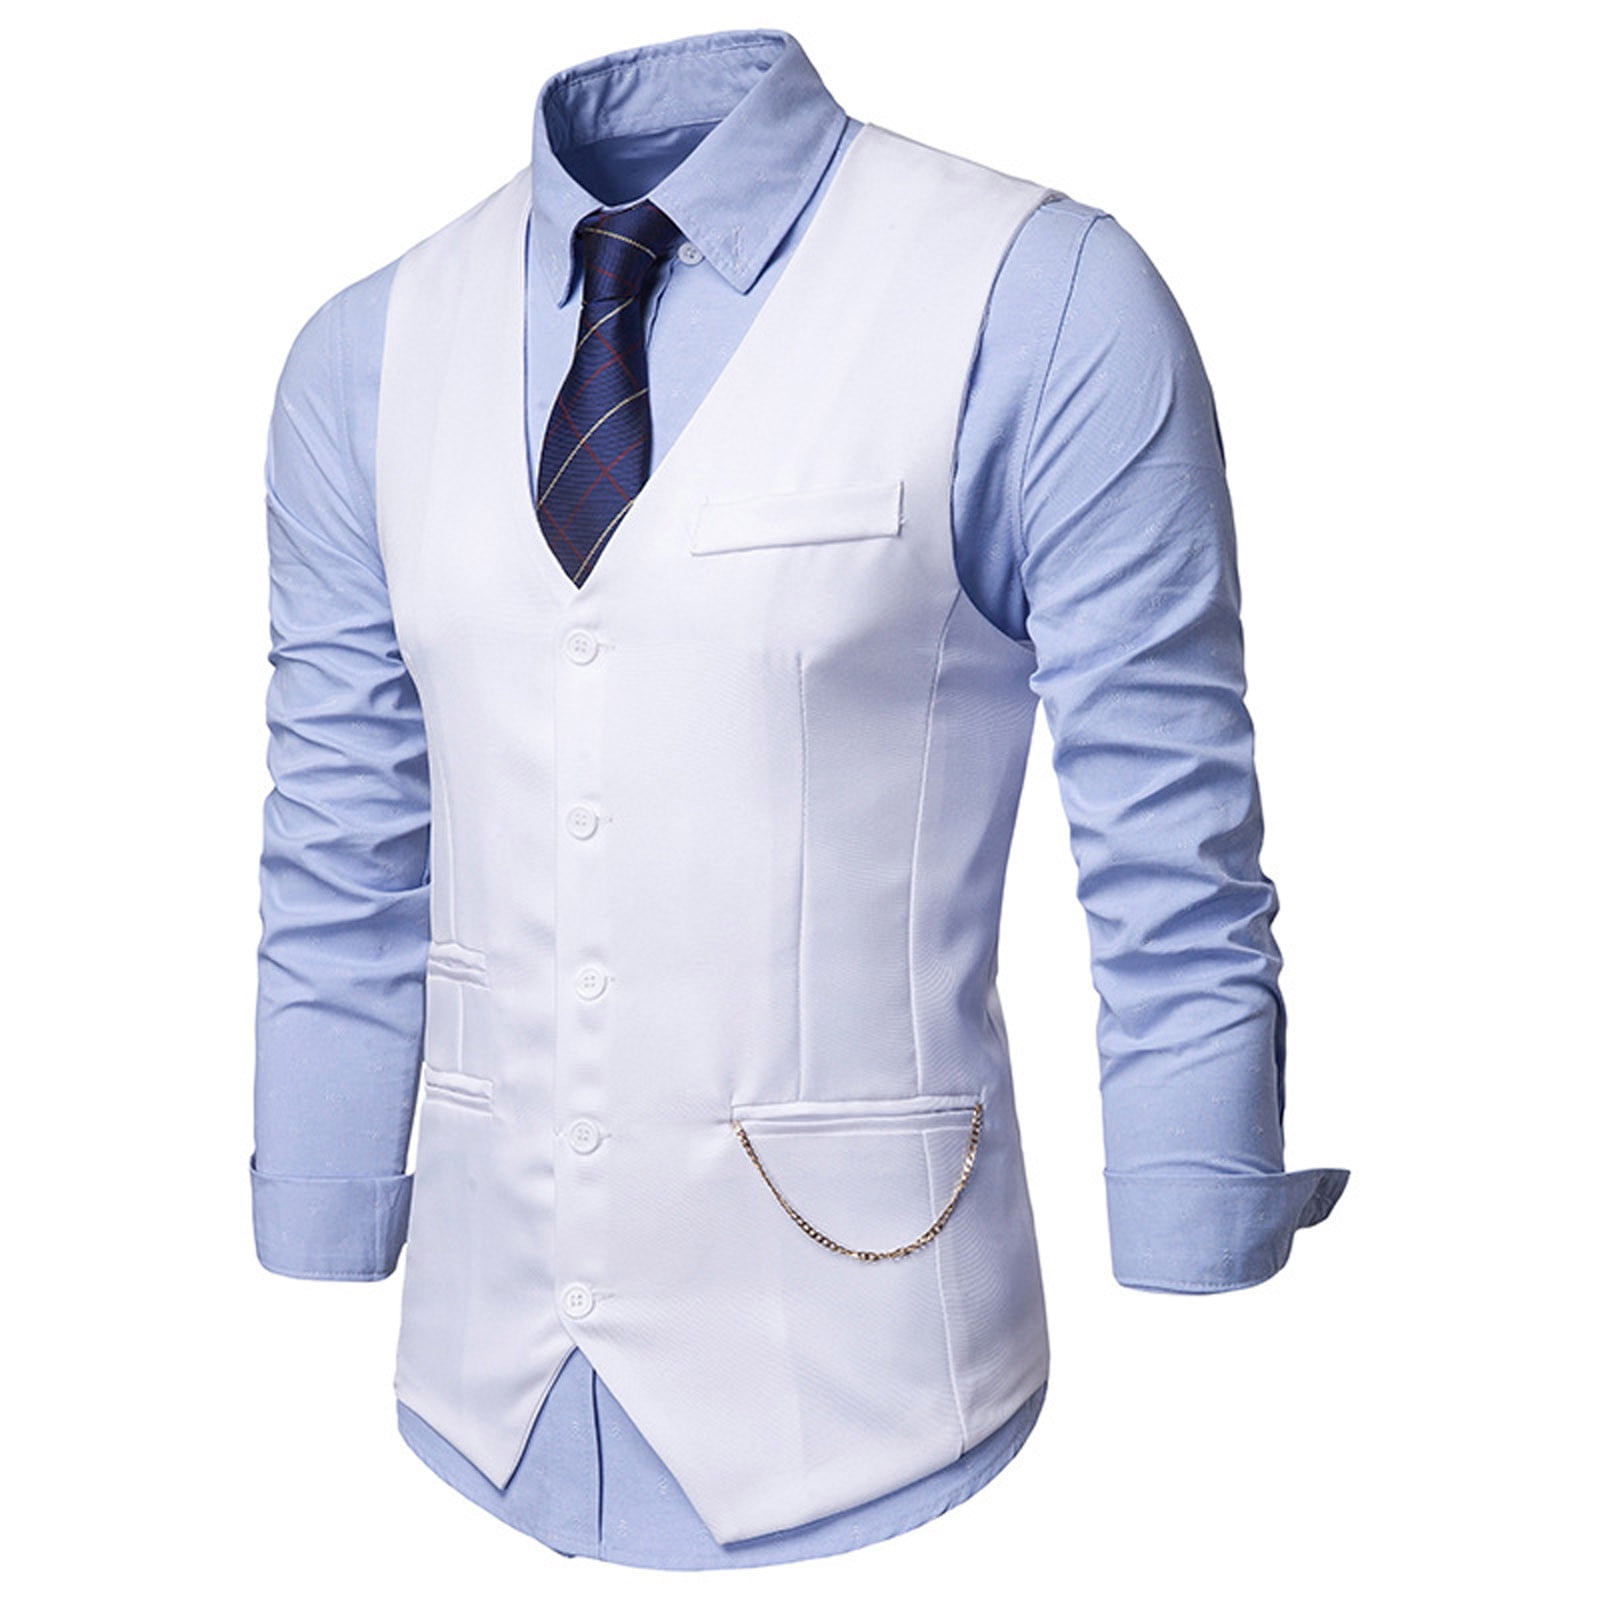 TIHLMK Suit Coat Sales Clearance Men Vest V-Neck Sleeveless Single ...